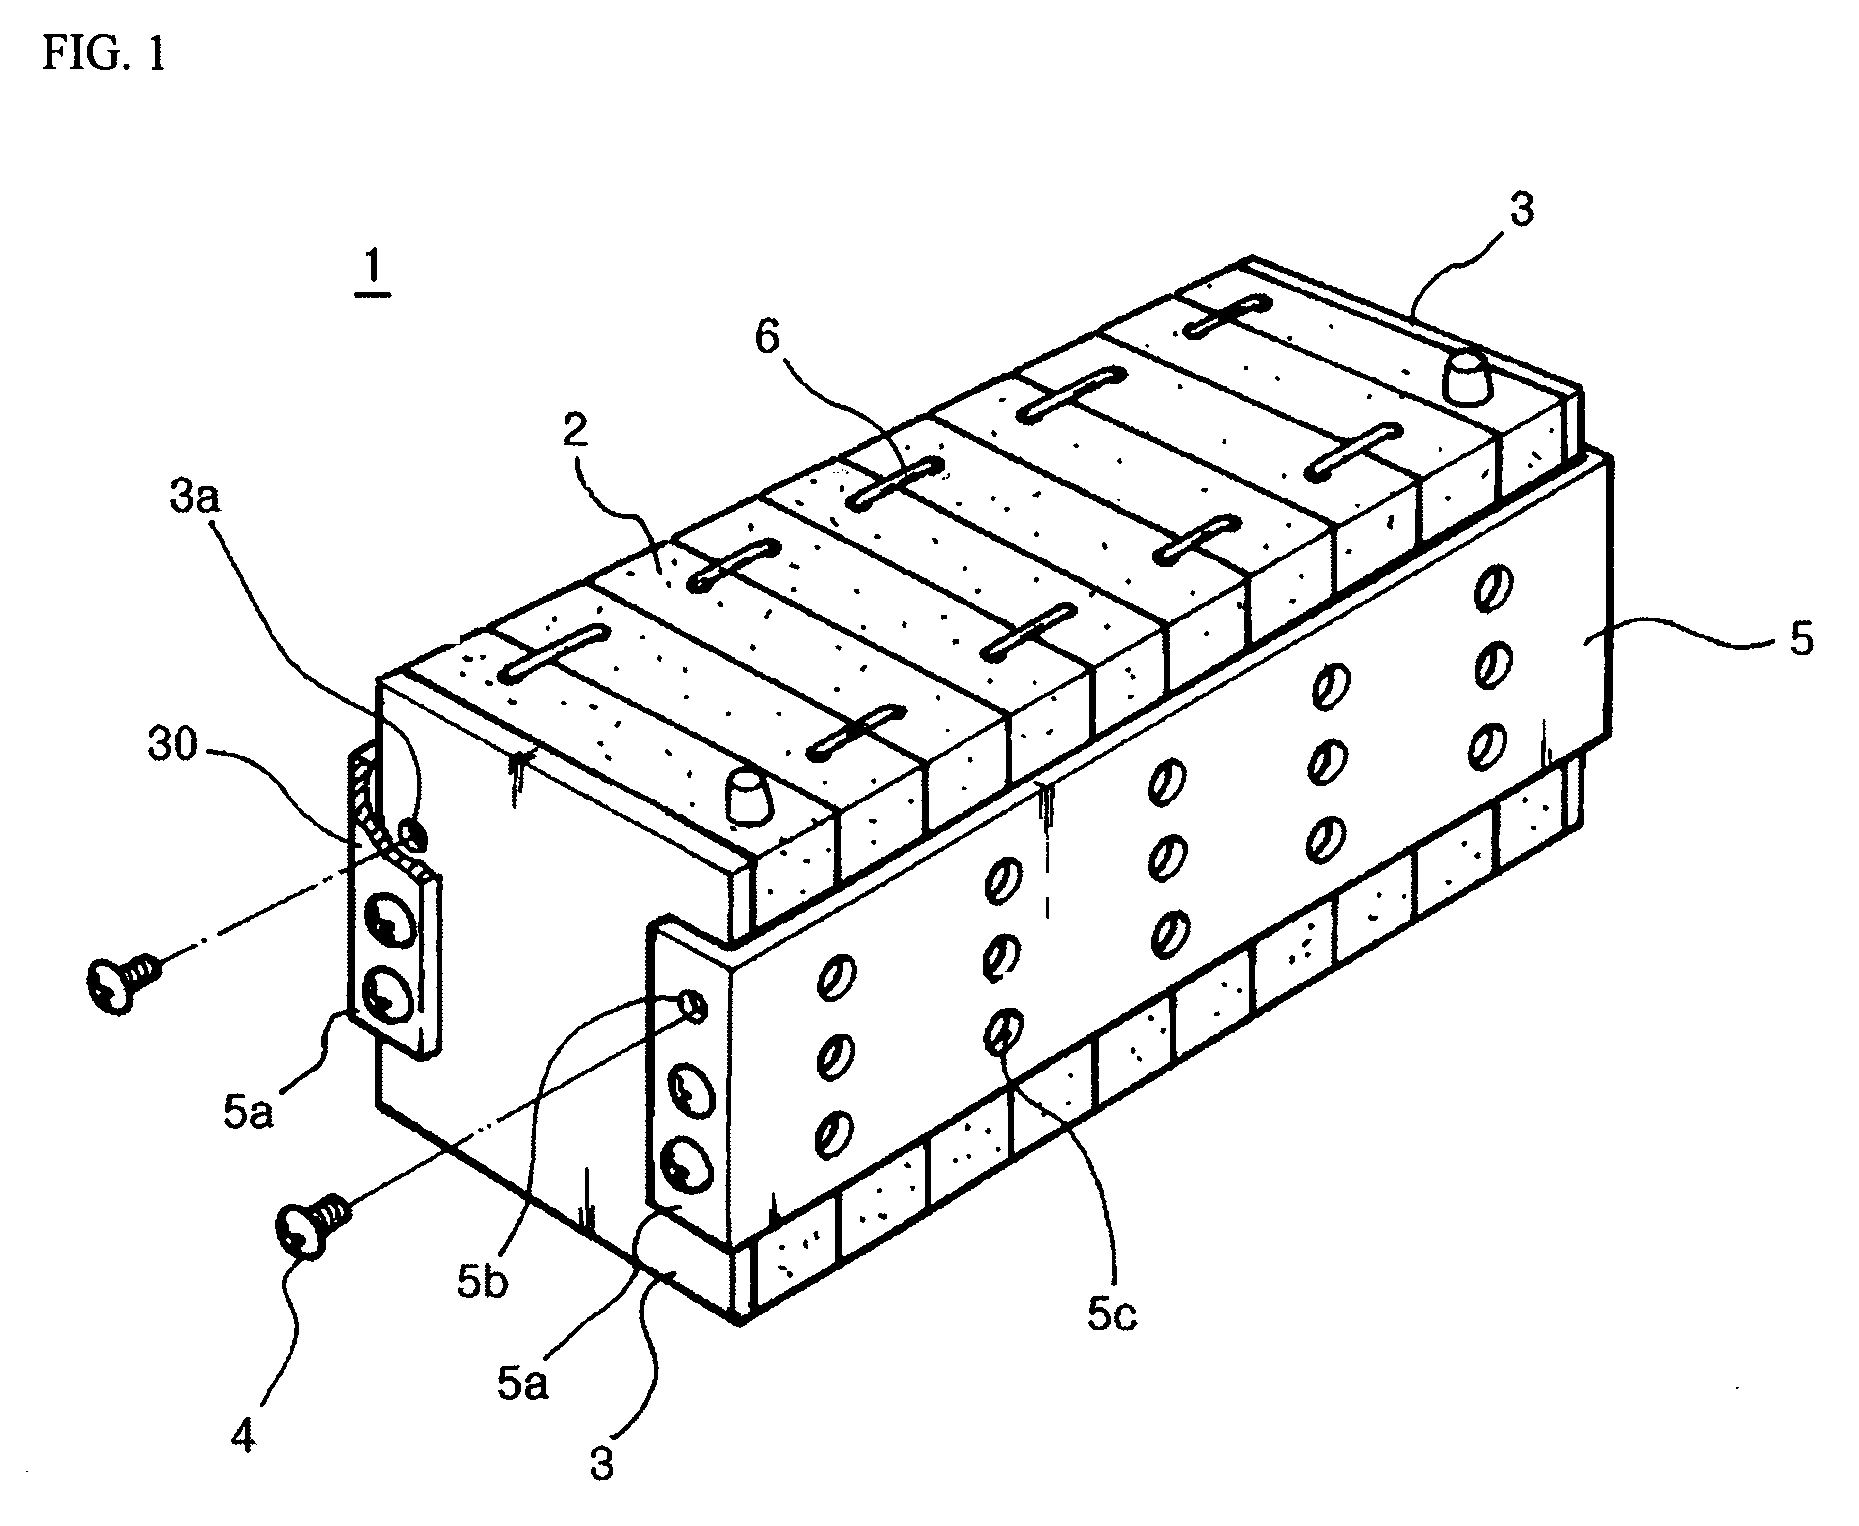 Secondary battery module